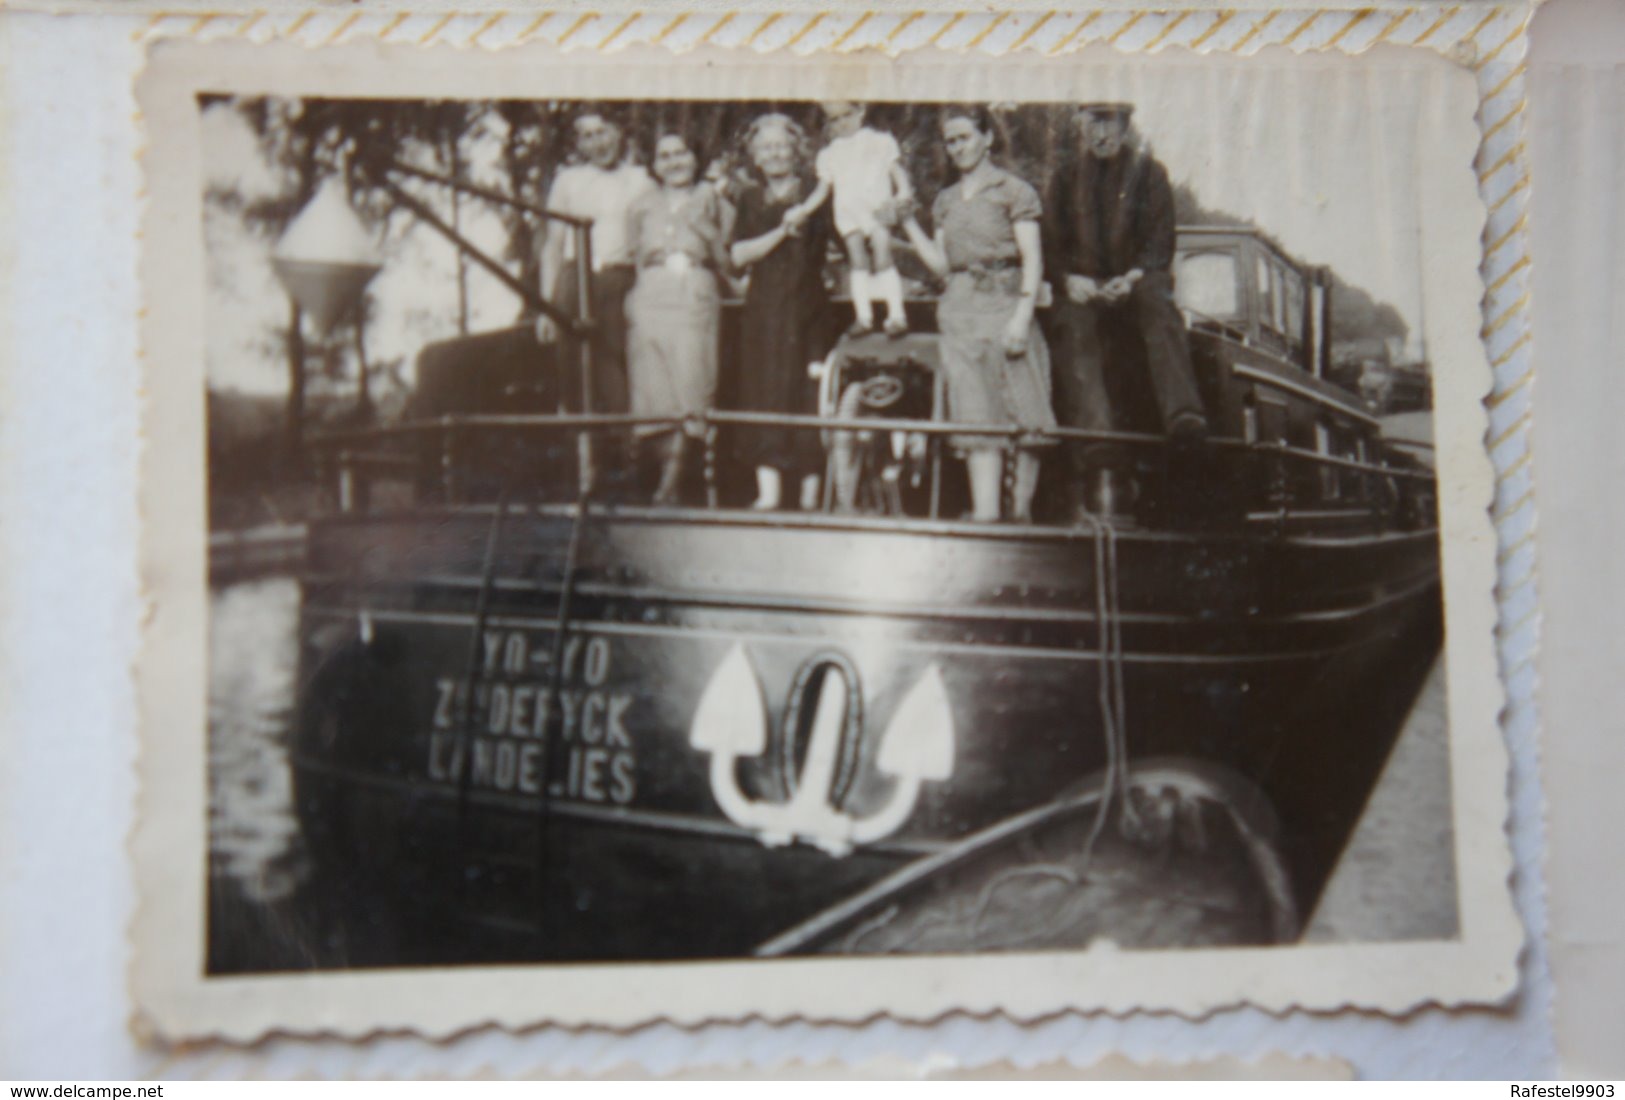 ALBUM Photo Famille Péniche Belgium entre 1930 et 1960 Barge Binnencscheepvaart Bâteau Navire Boat Boot Marine Kanaal